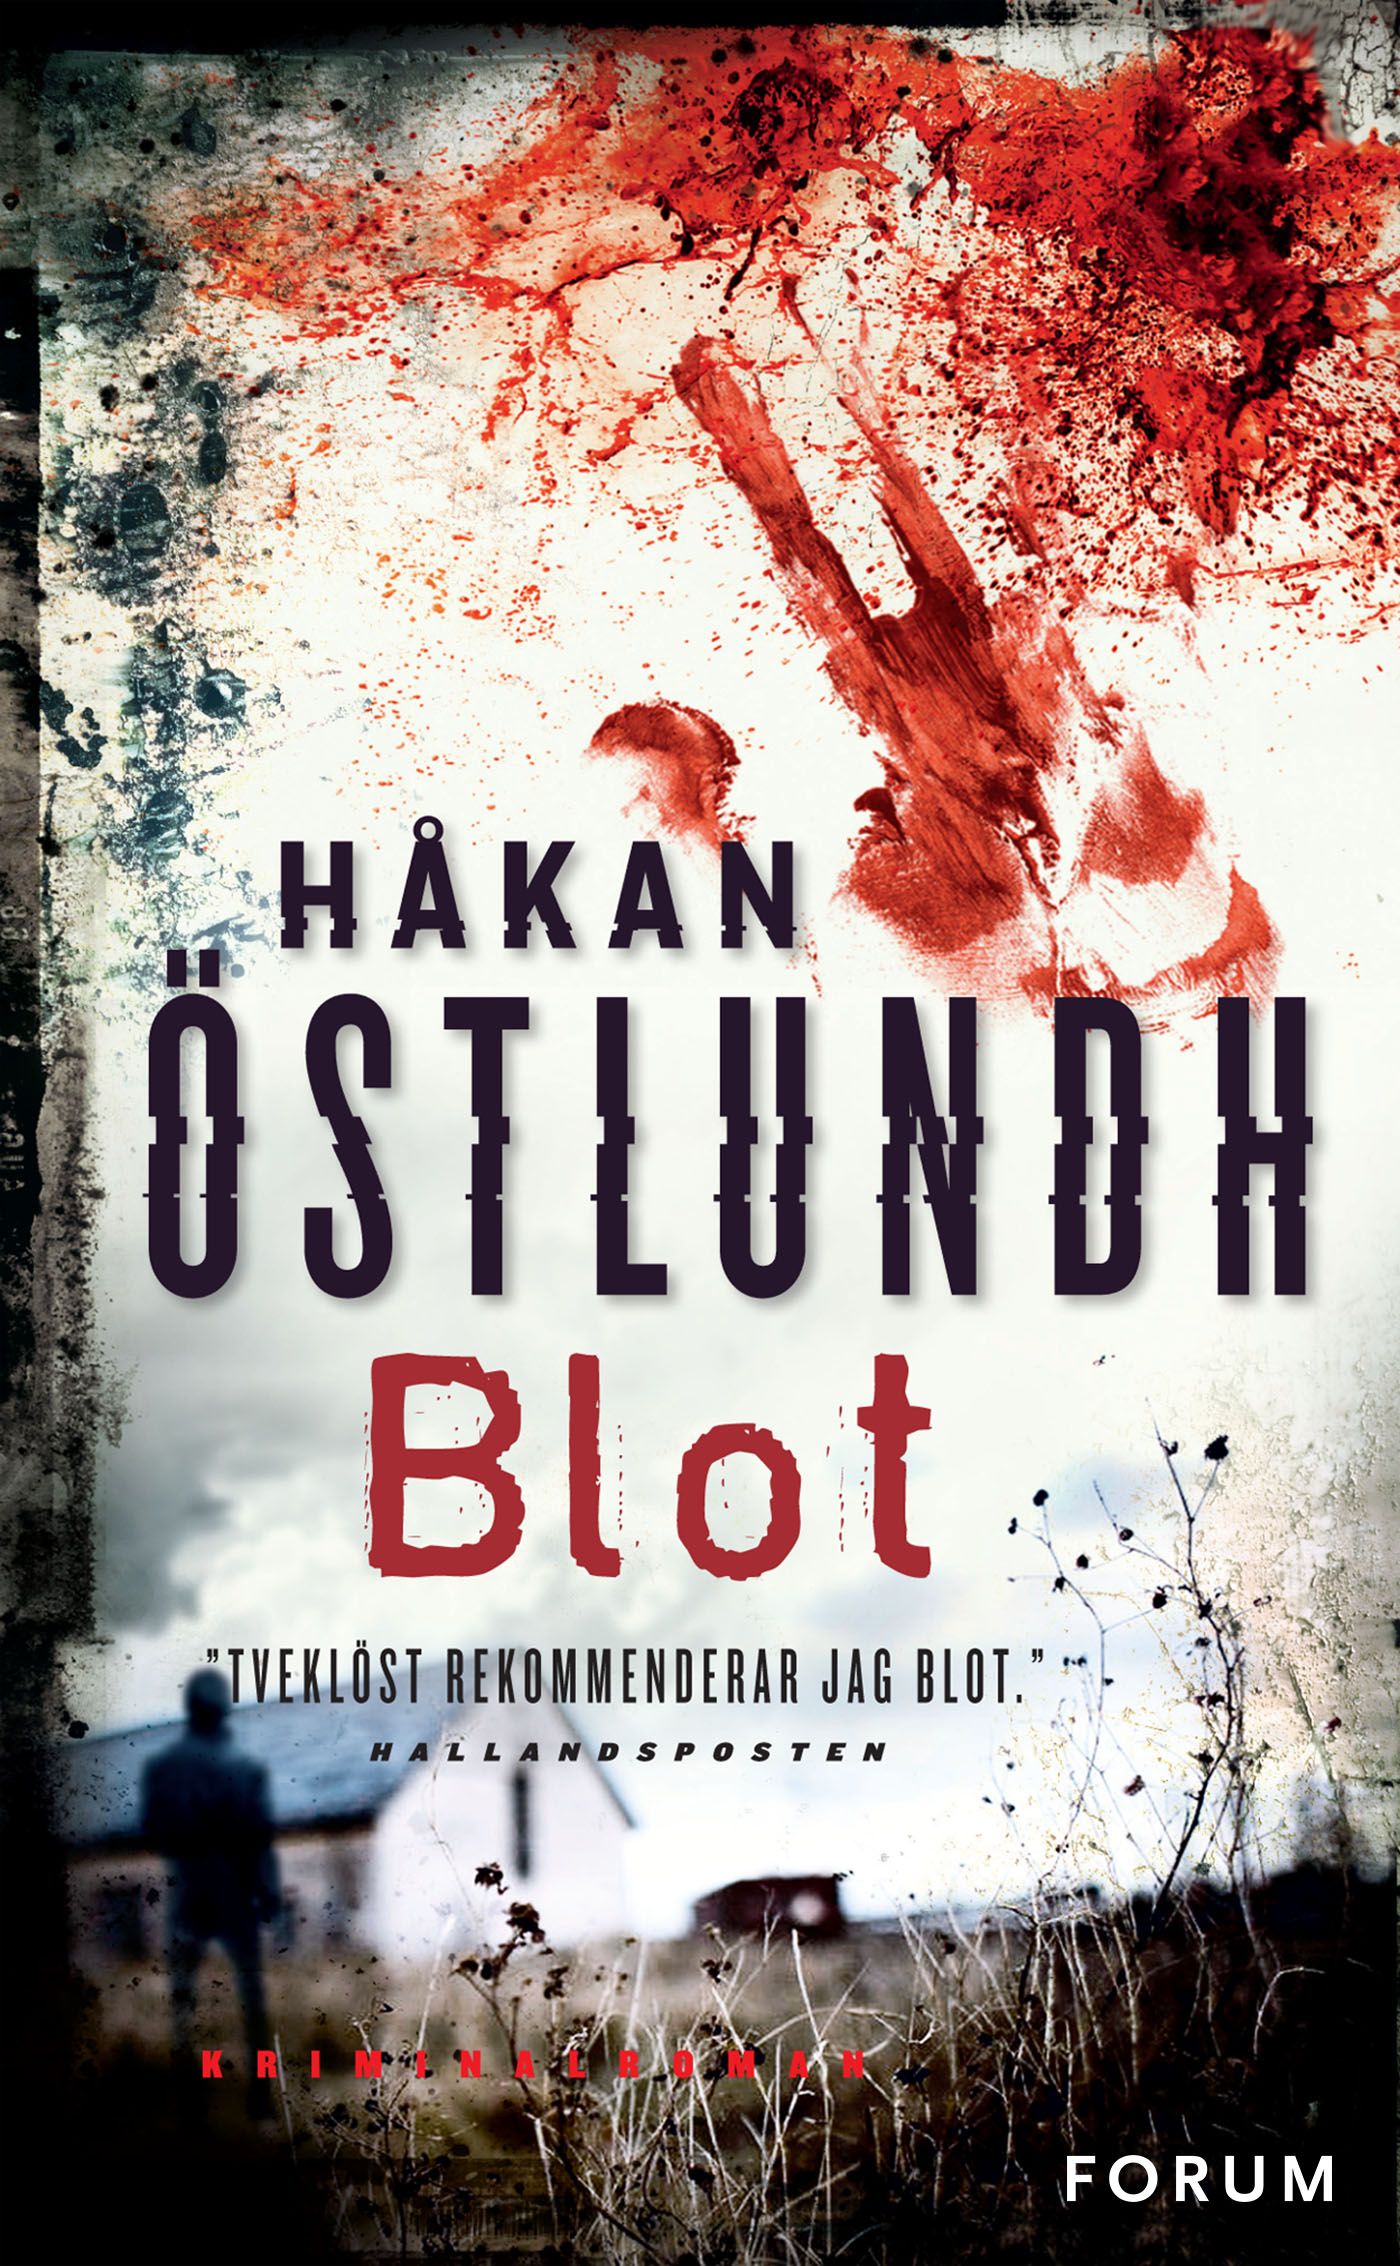 Blot, eBook by Håkan Östlundh